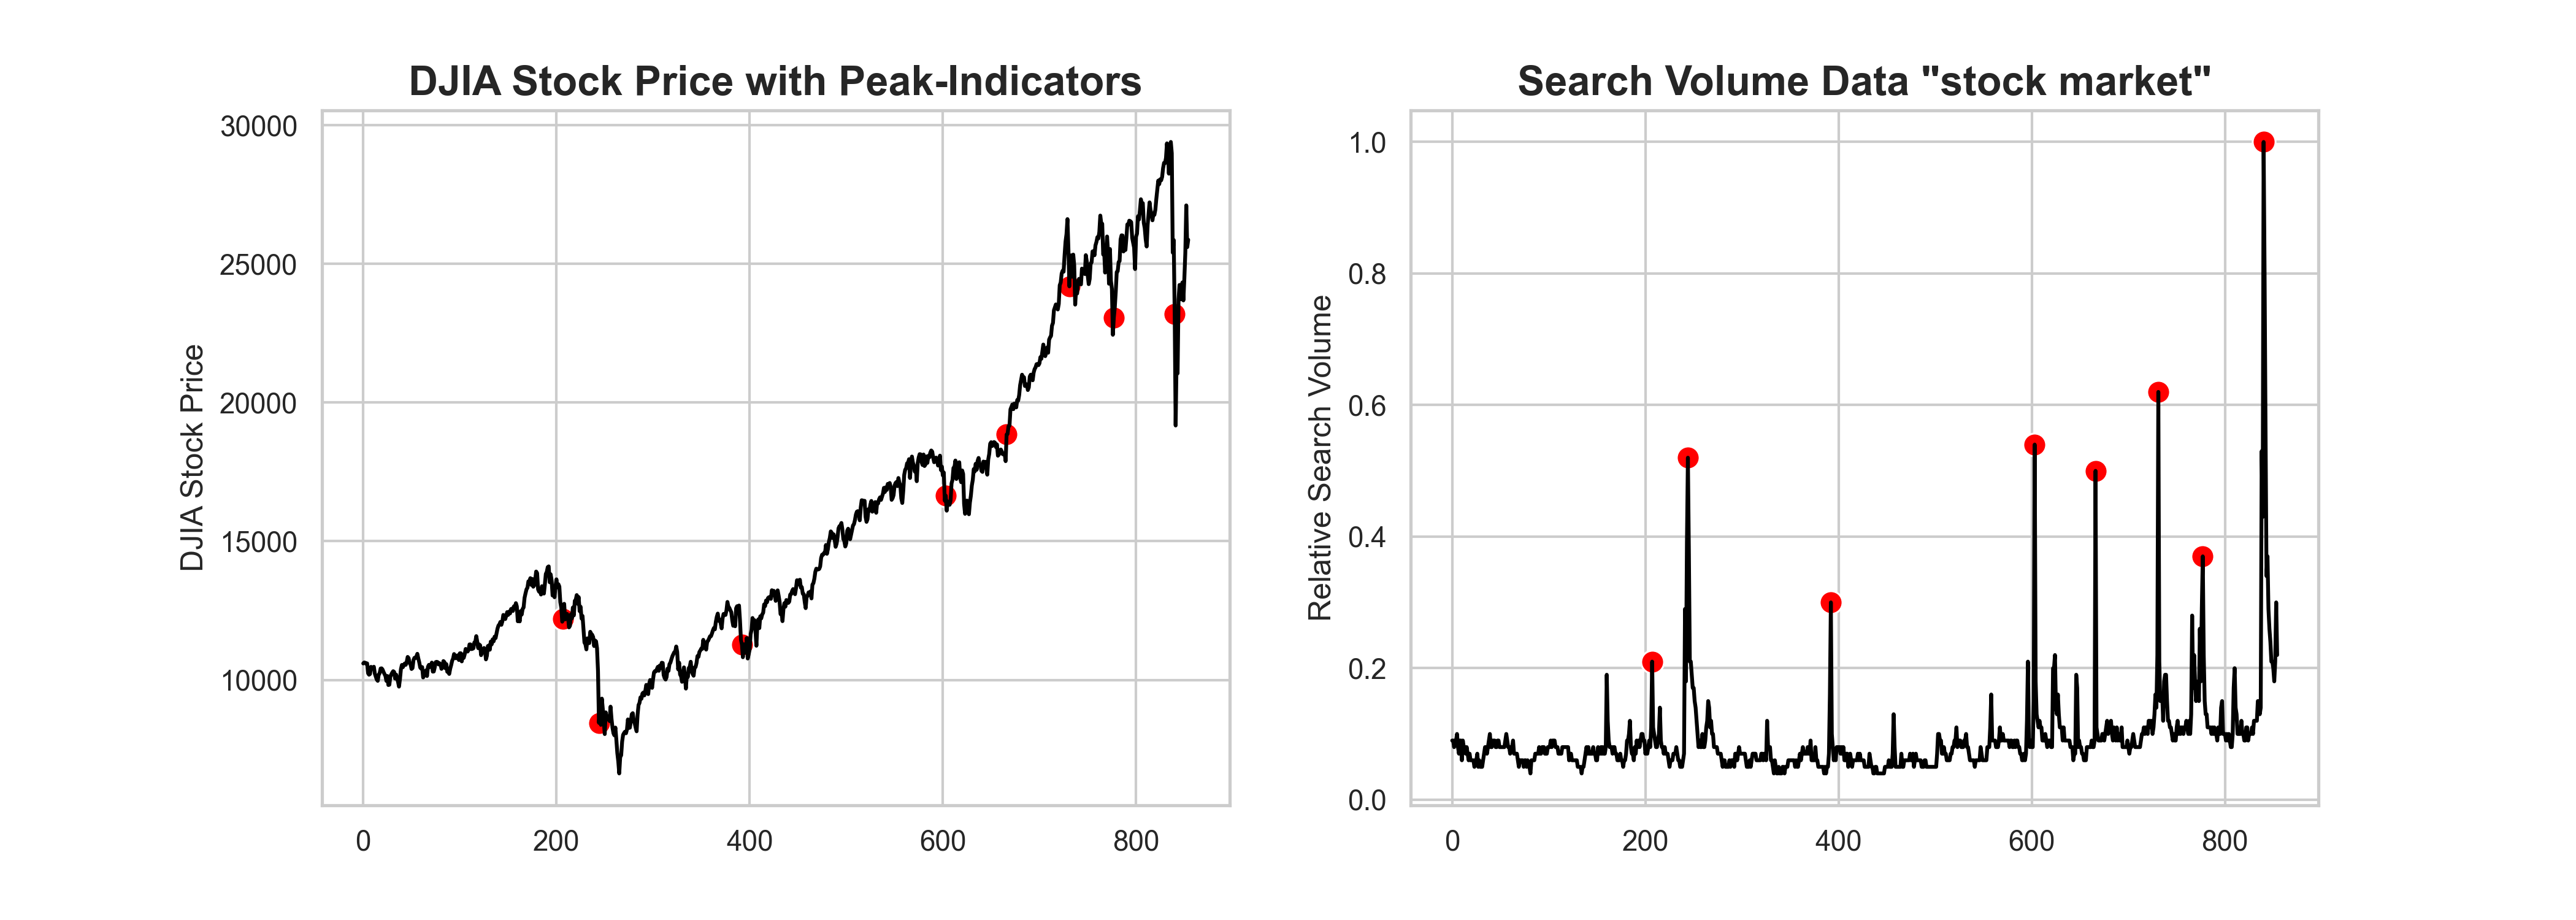 DJIA stock price data with peak-indicators of 'stock market'.